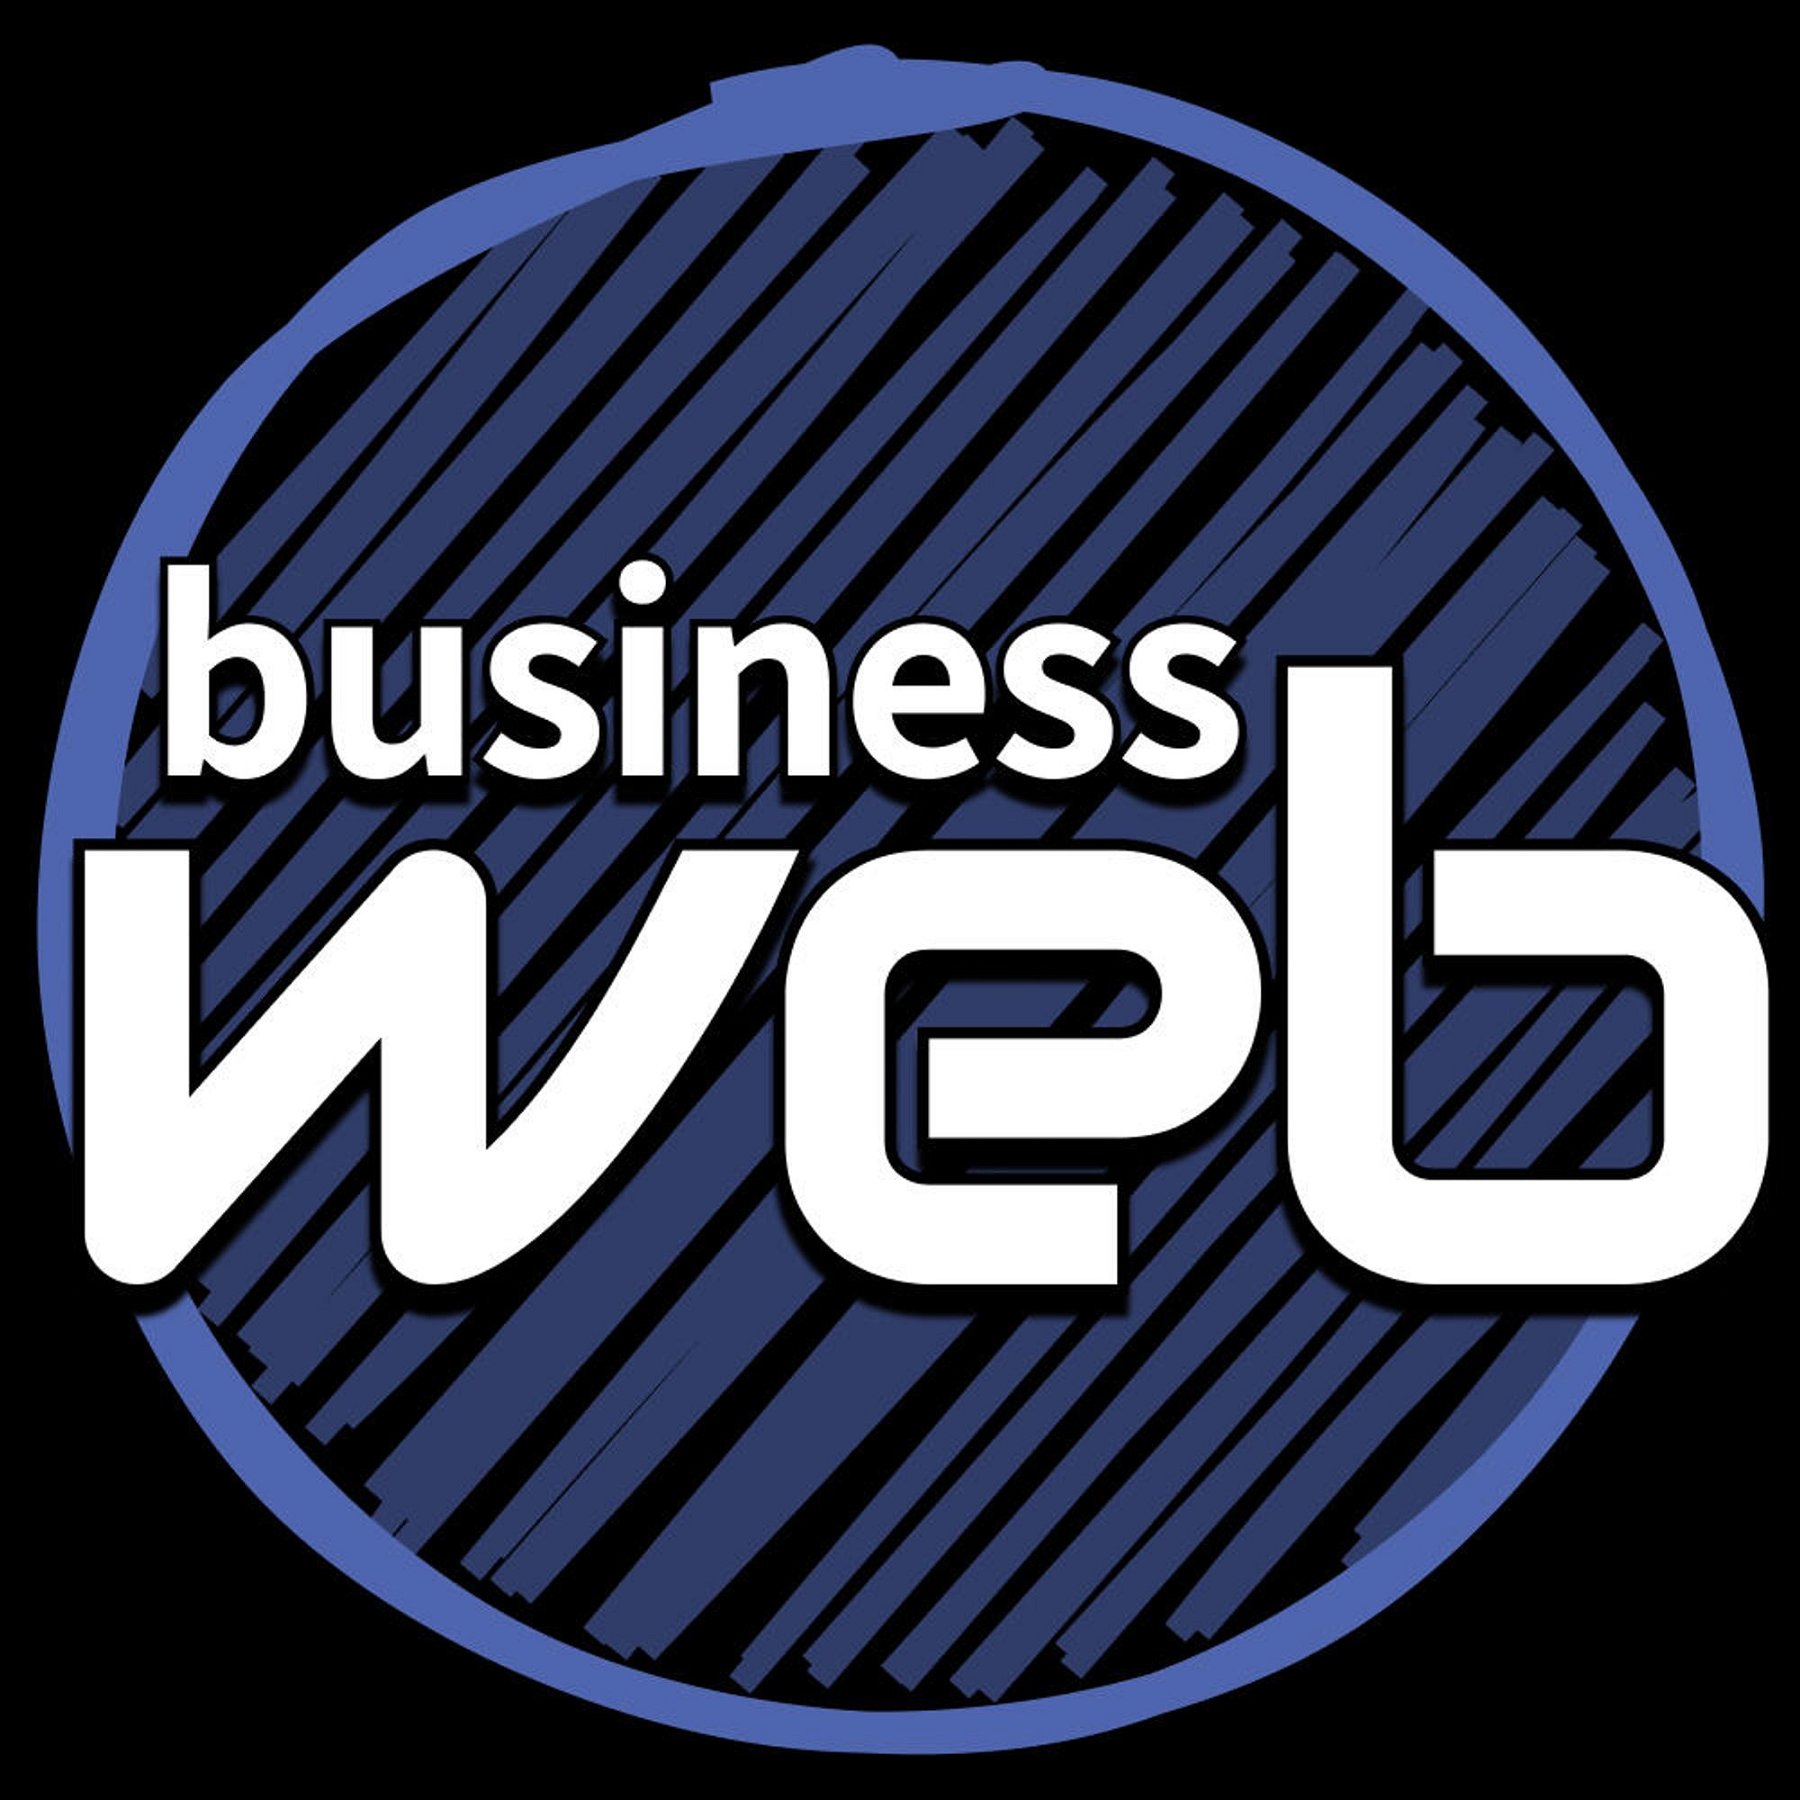 Business Web 🕸️